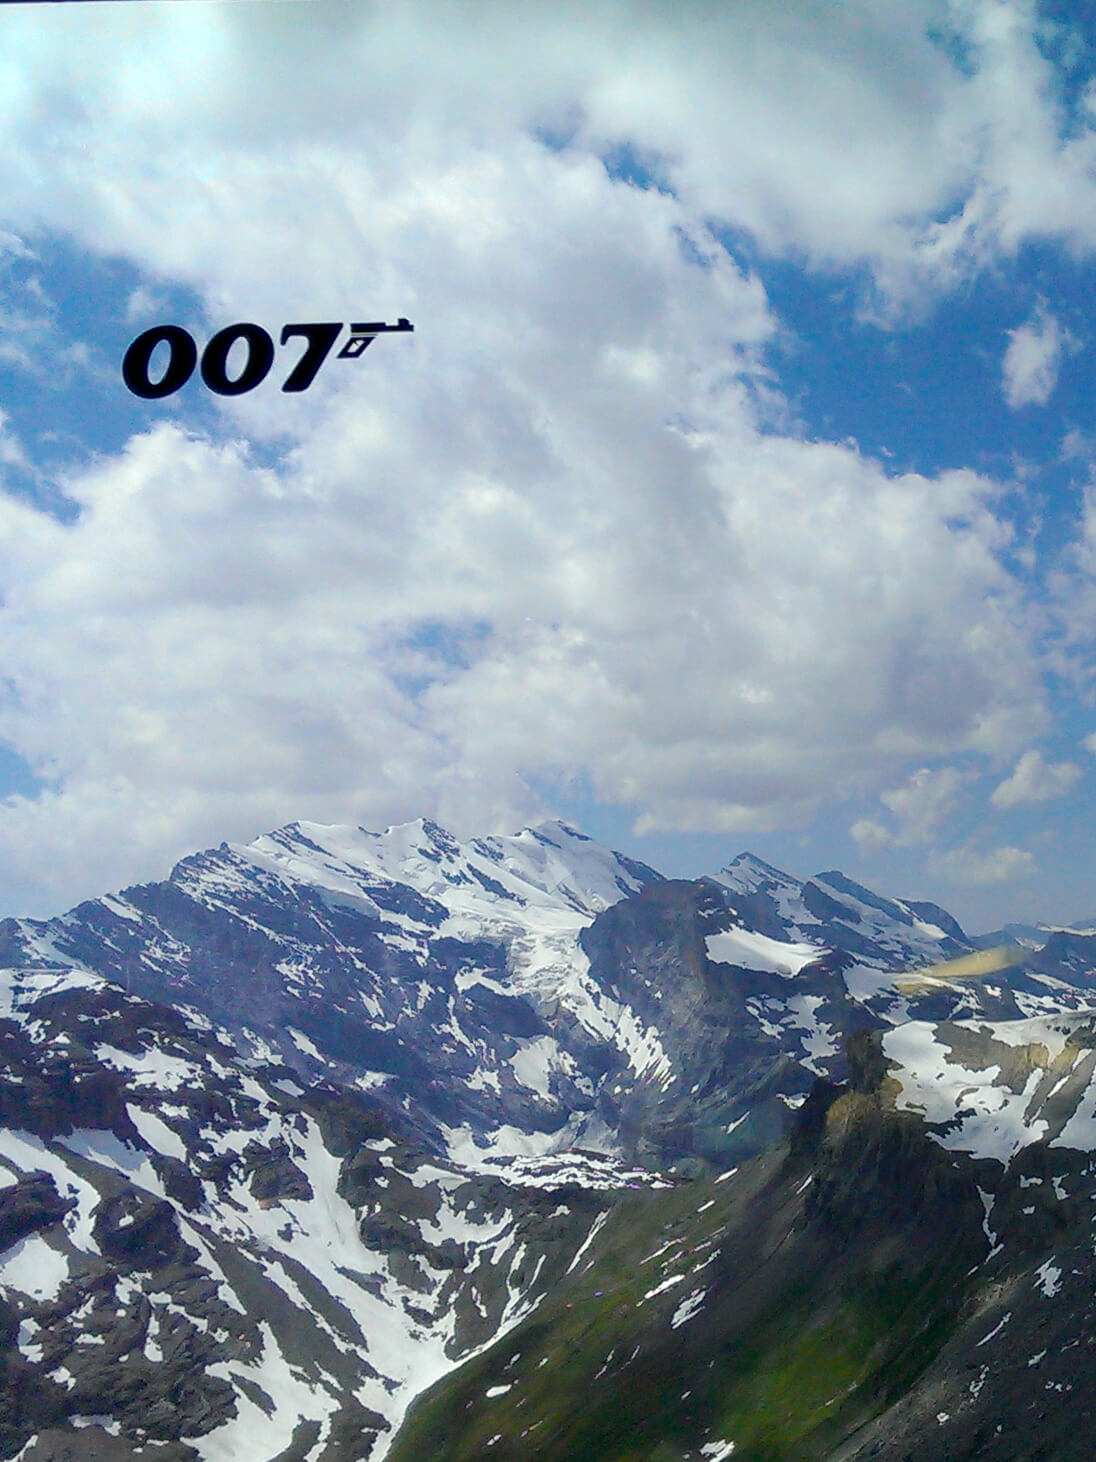 James Bond Mount Schilthorn